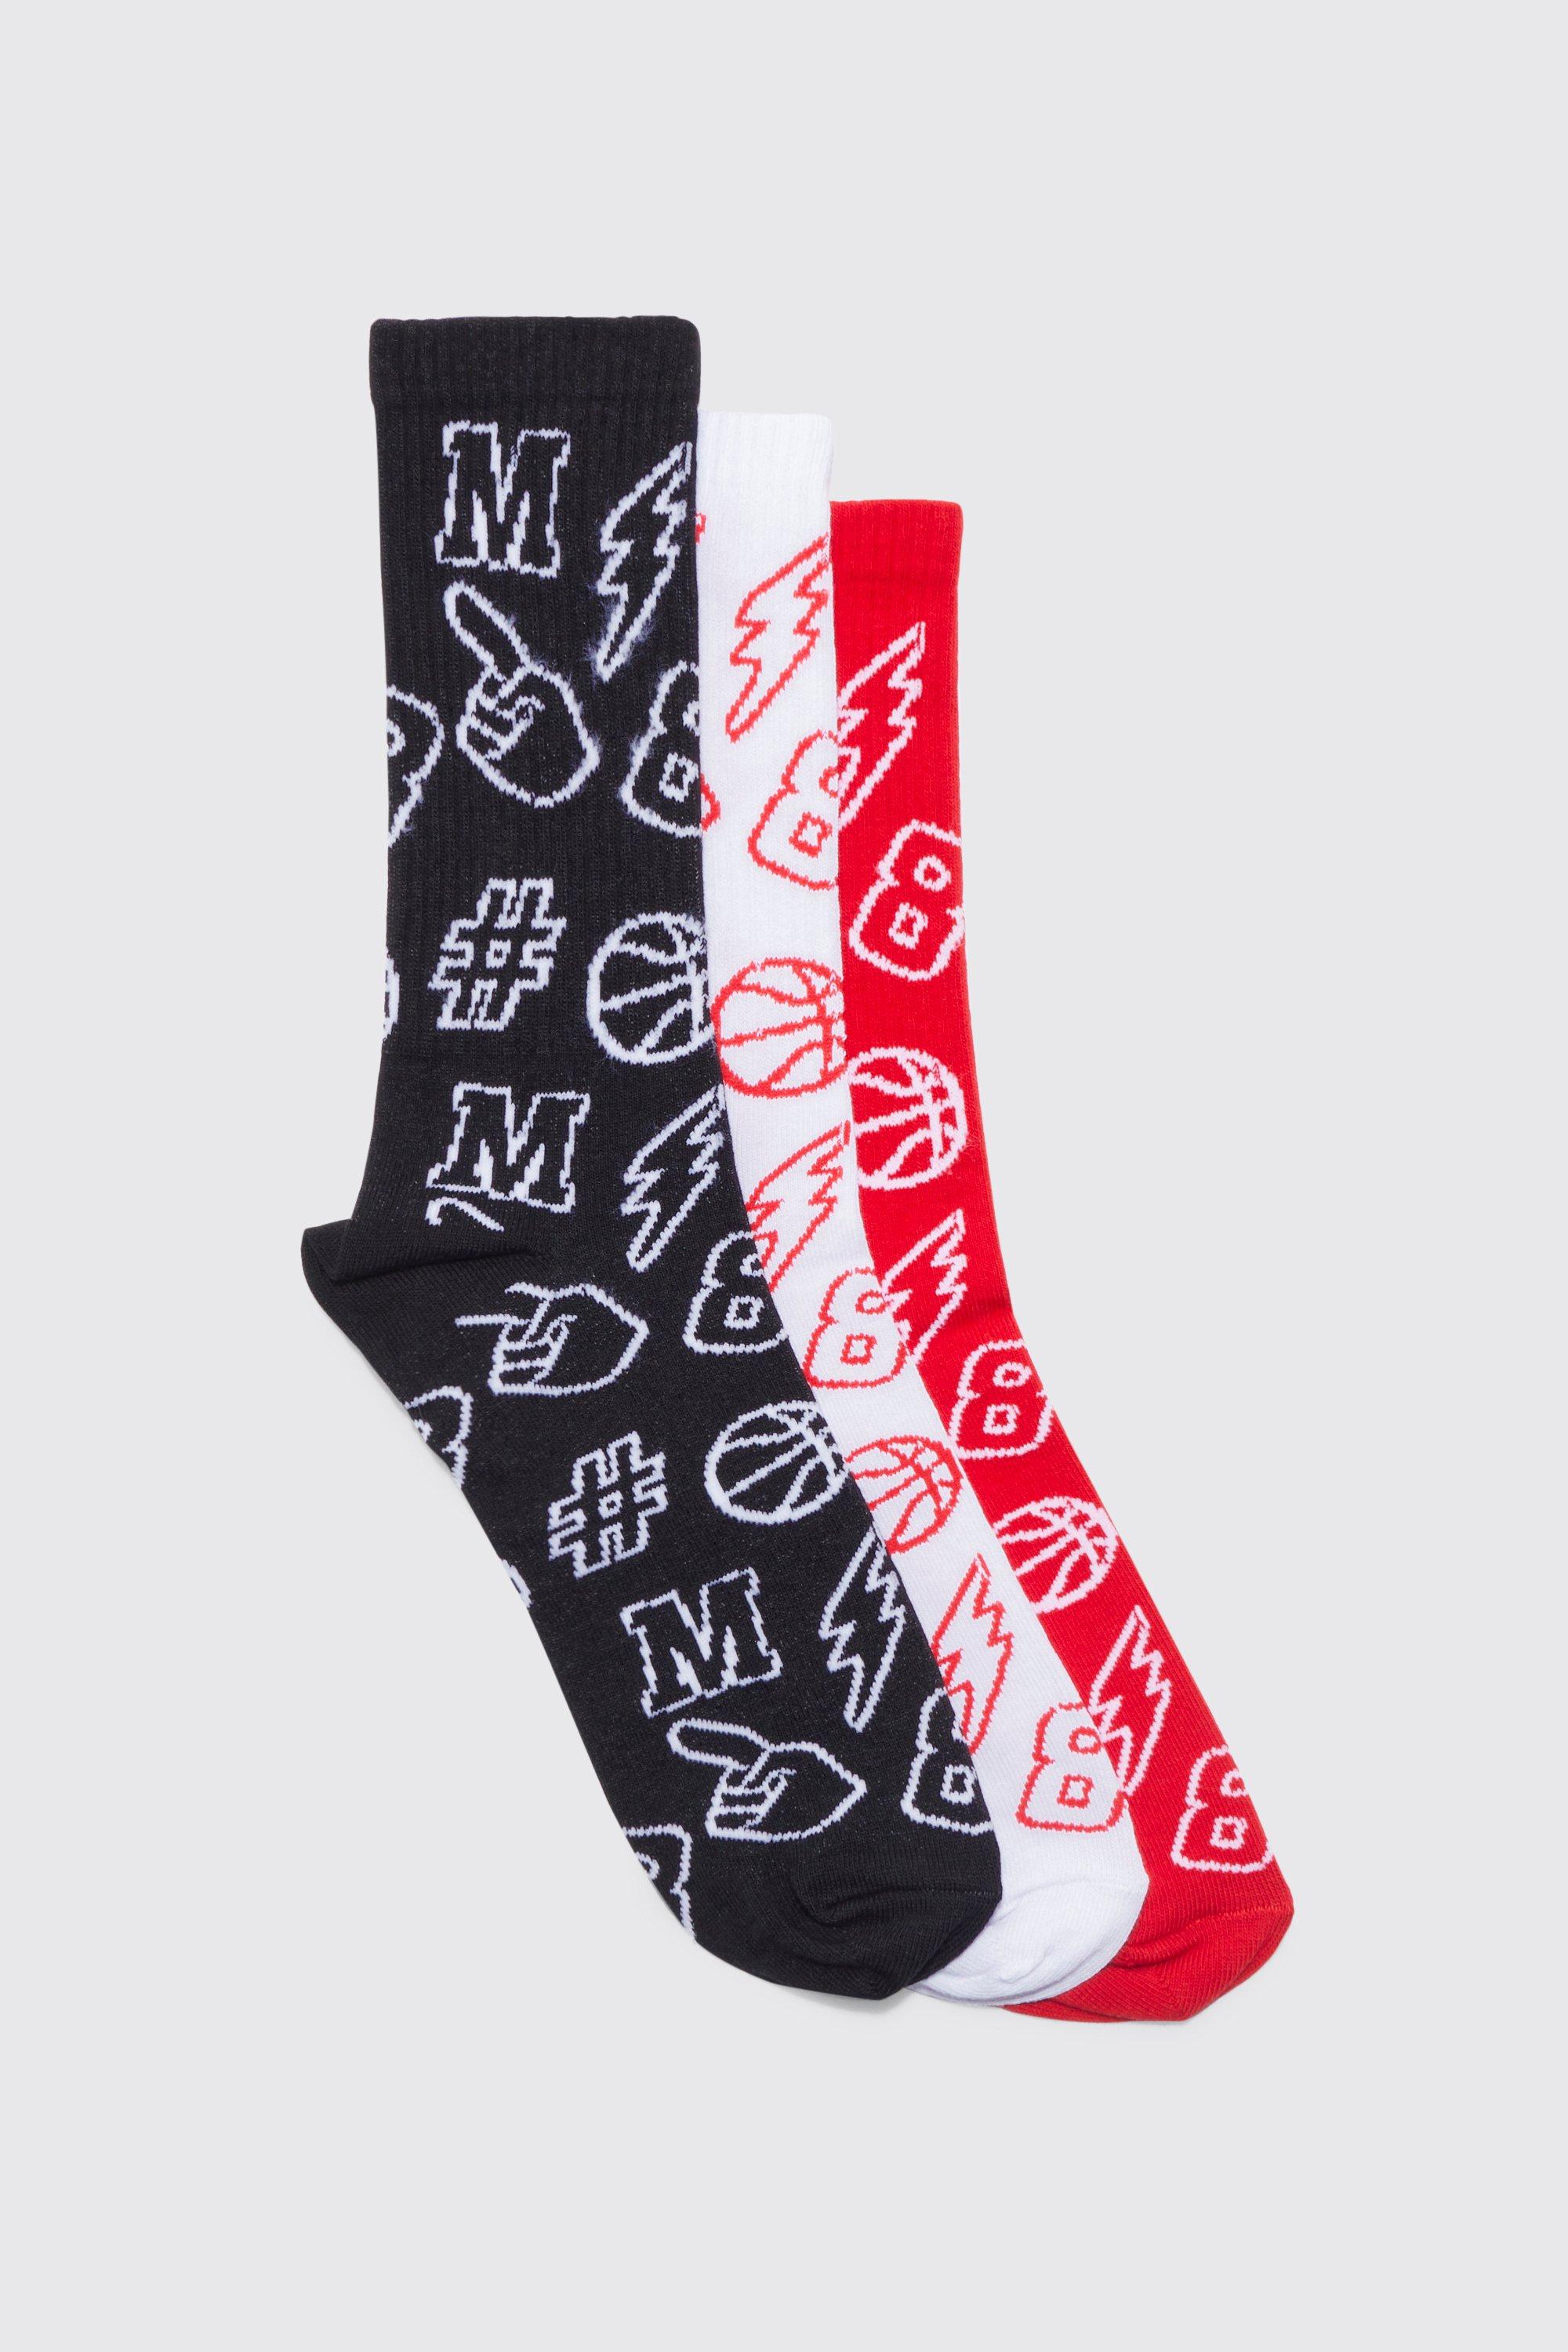 men's 3 pack all over graphic socks - multi - one size, multi